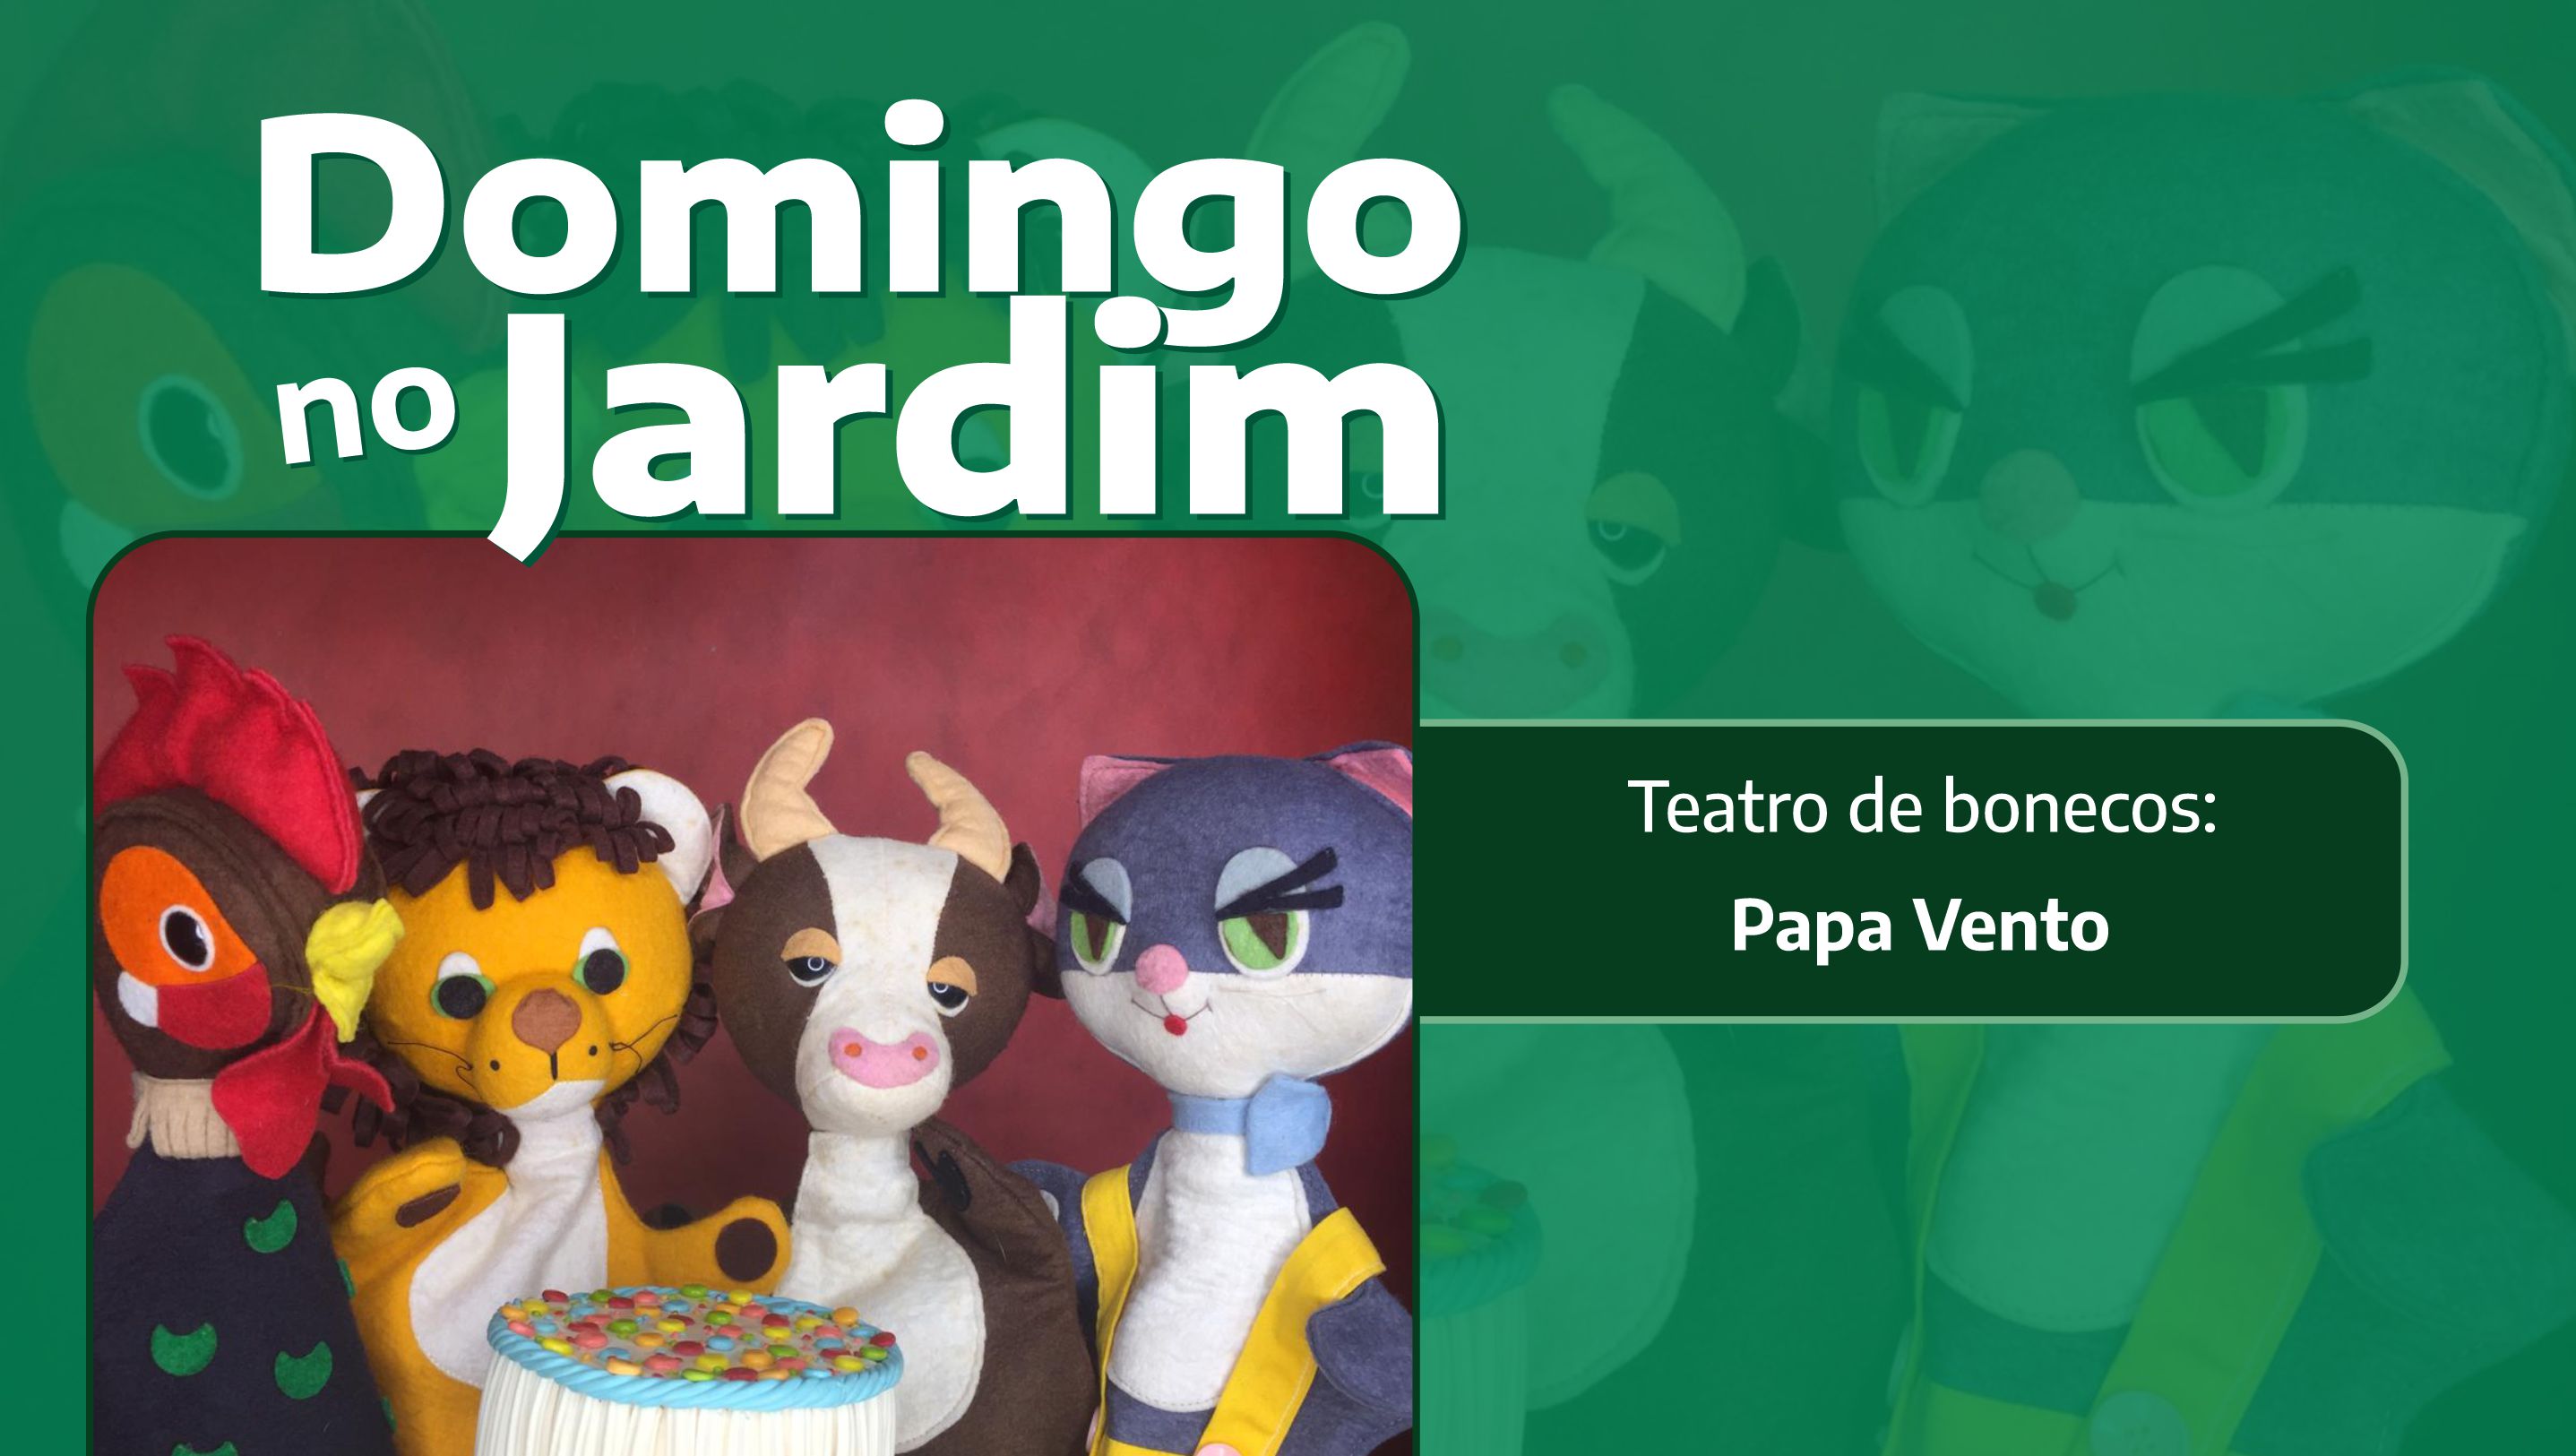 Papa Vento celebrates the anniversary of the Rio Botanical Garden